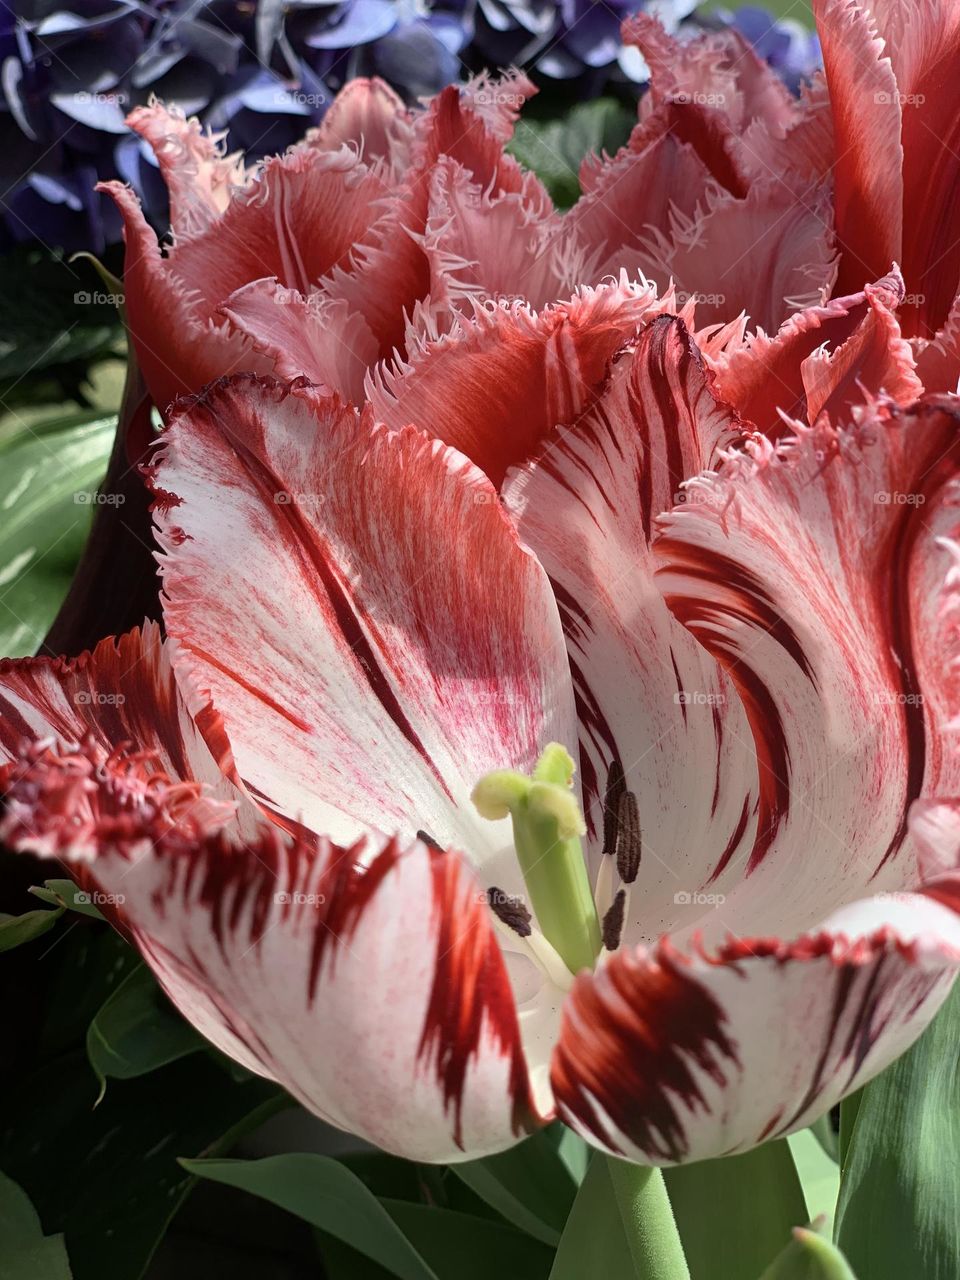 Tulip display at the Erie Botanical Garden Buffalo, New York